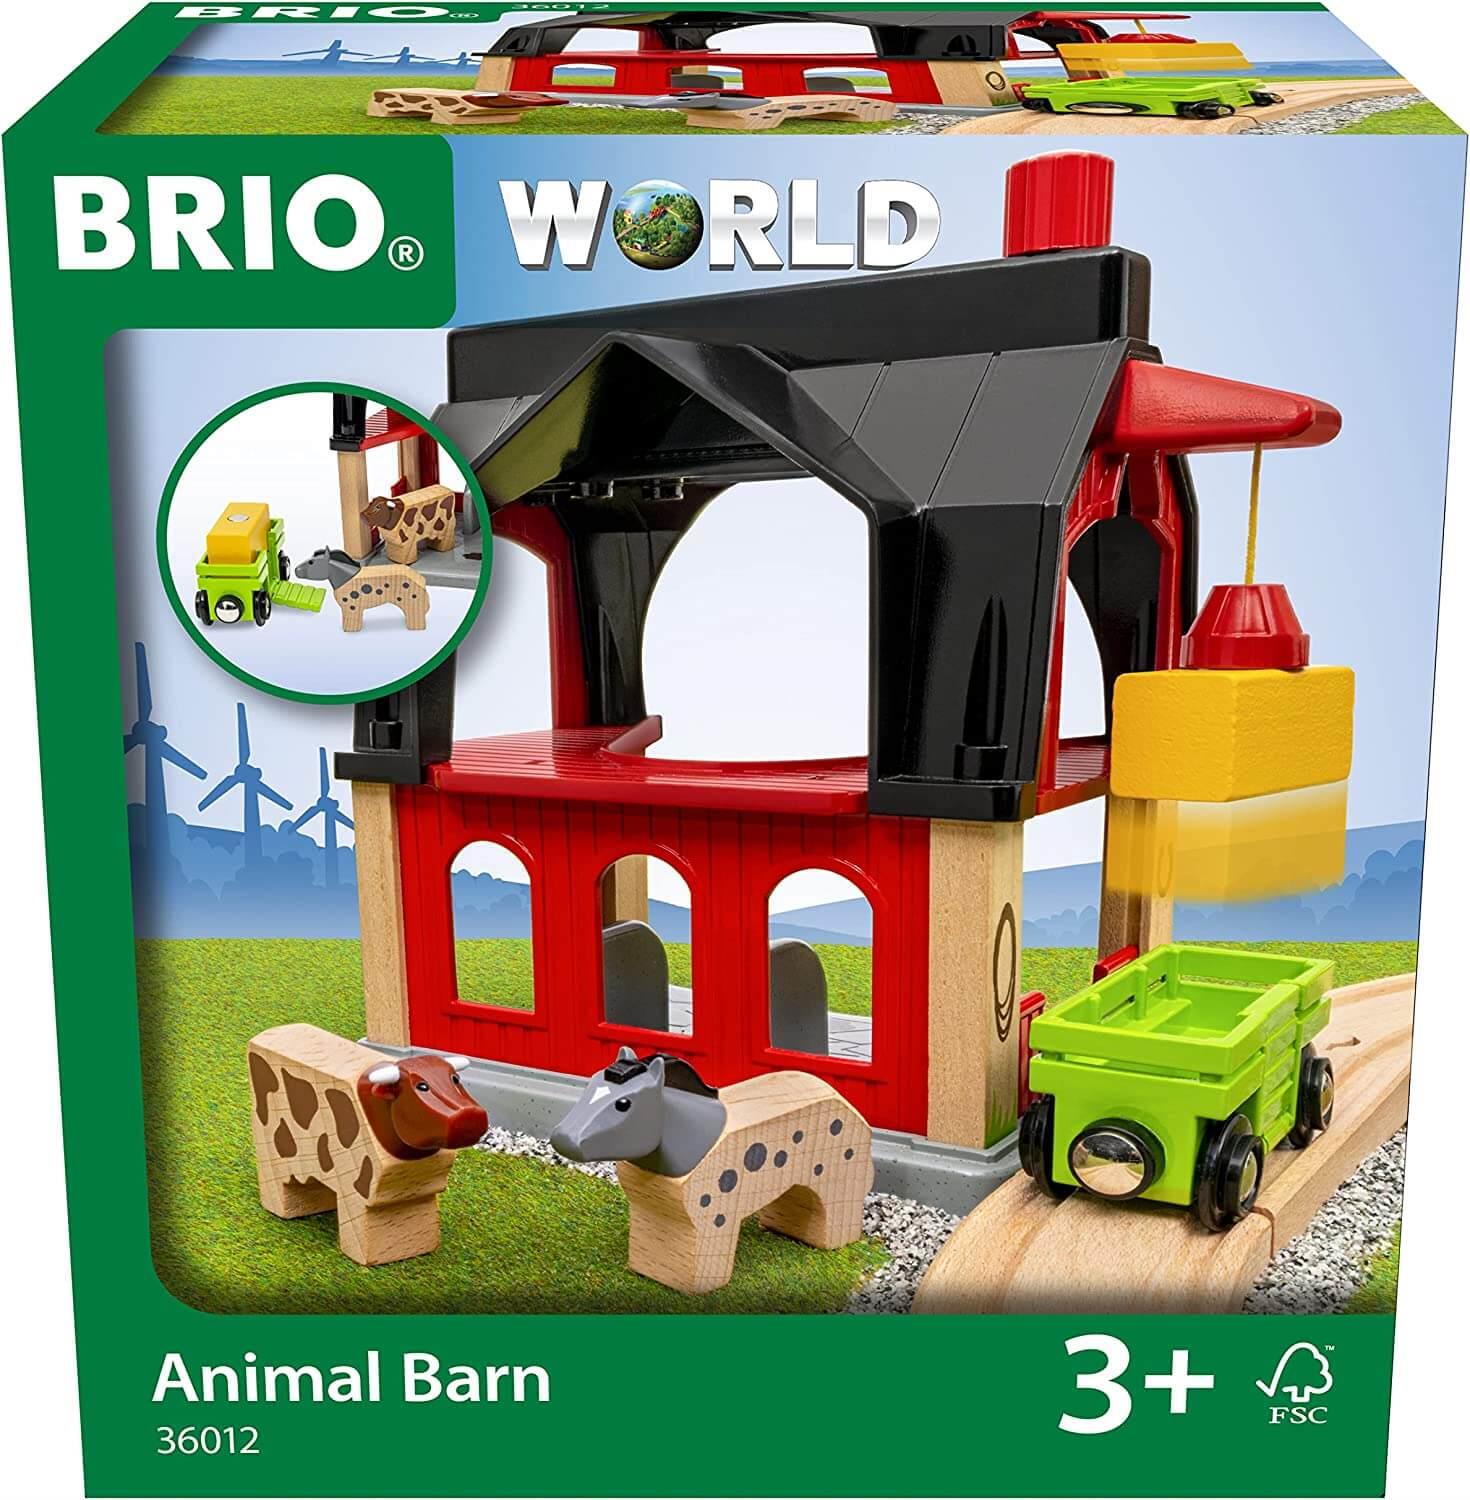 Brio World 36012 Animal Barn